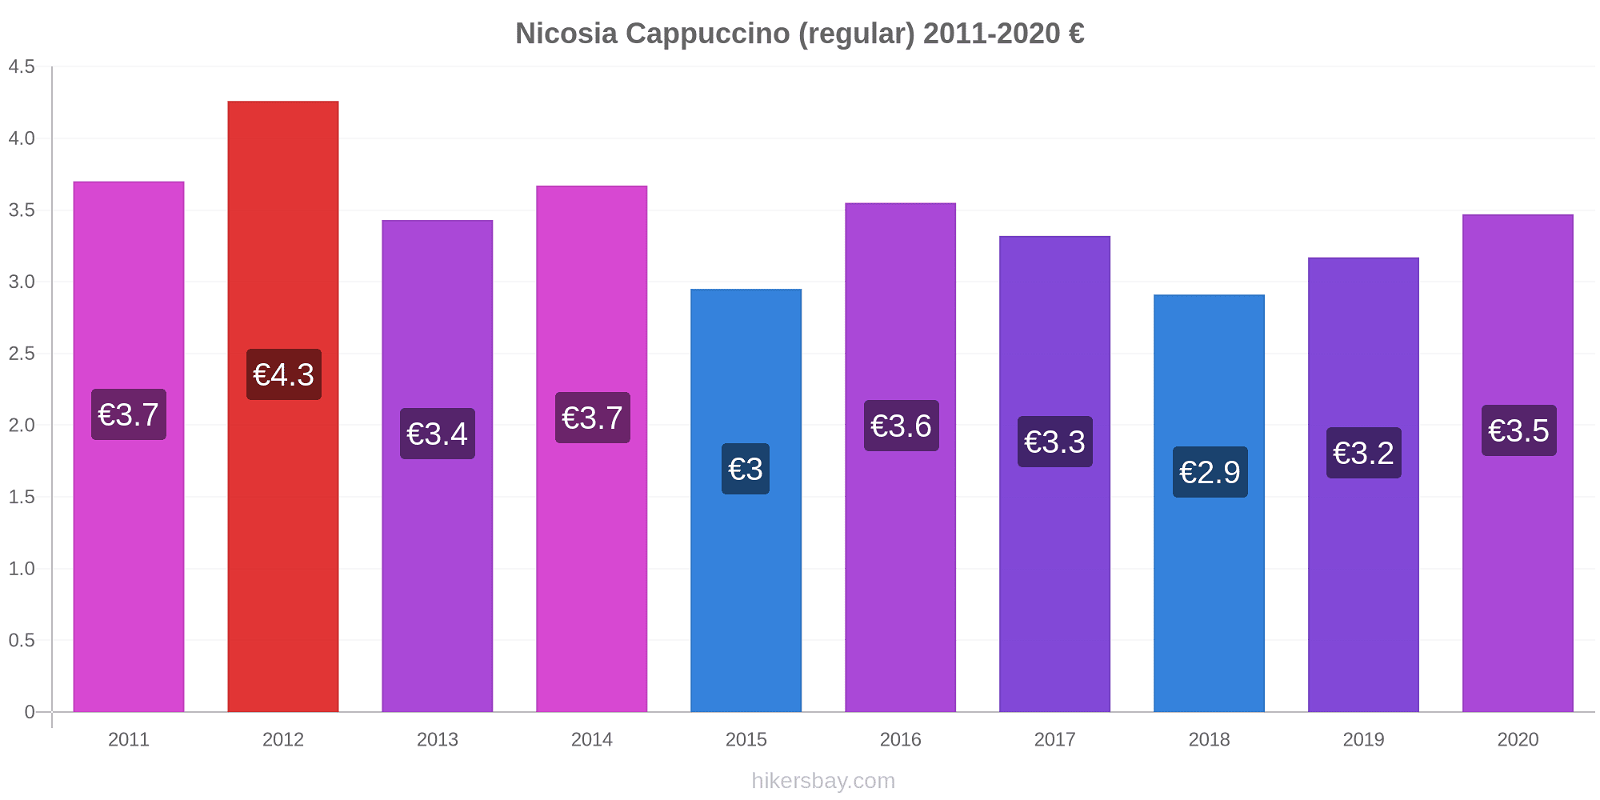 Nicosia price changes Cappuccino (regular) hikersbay.com